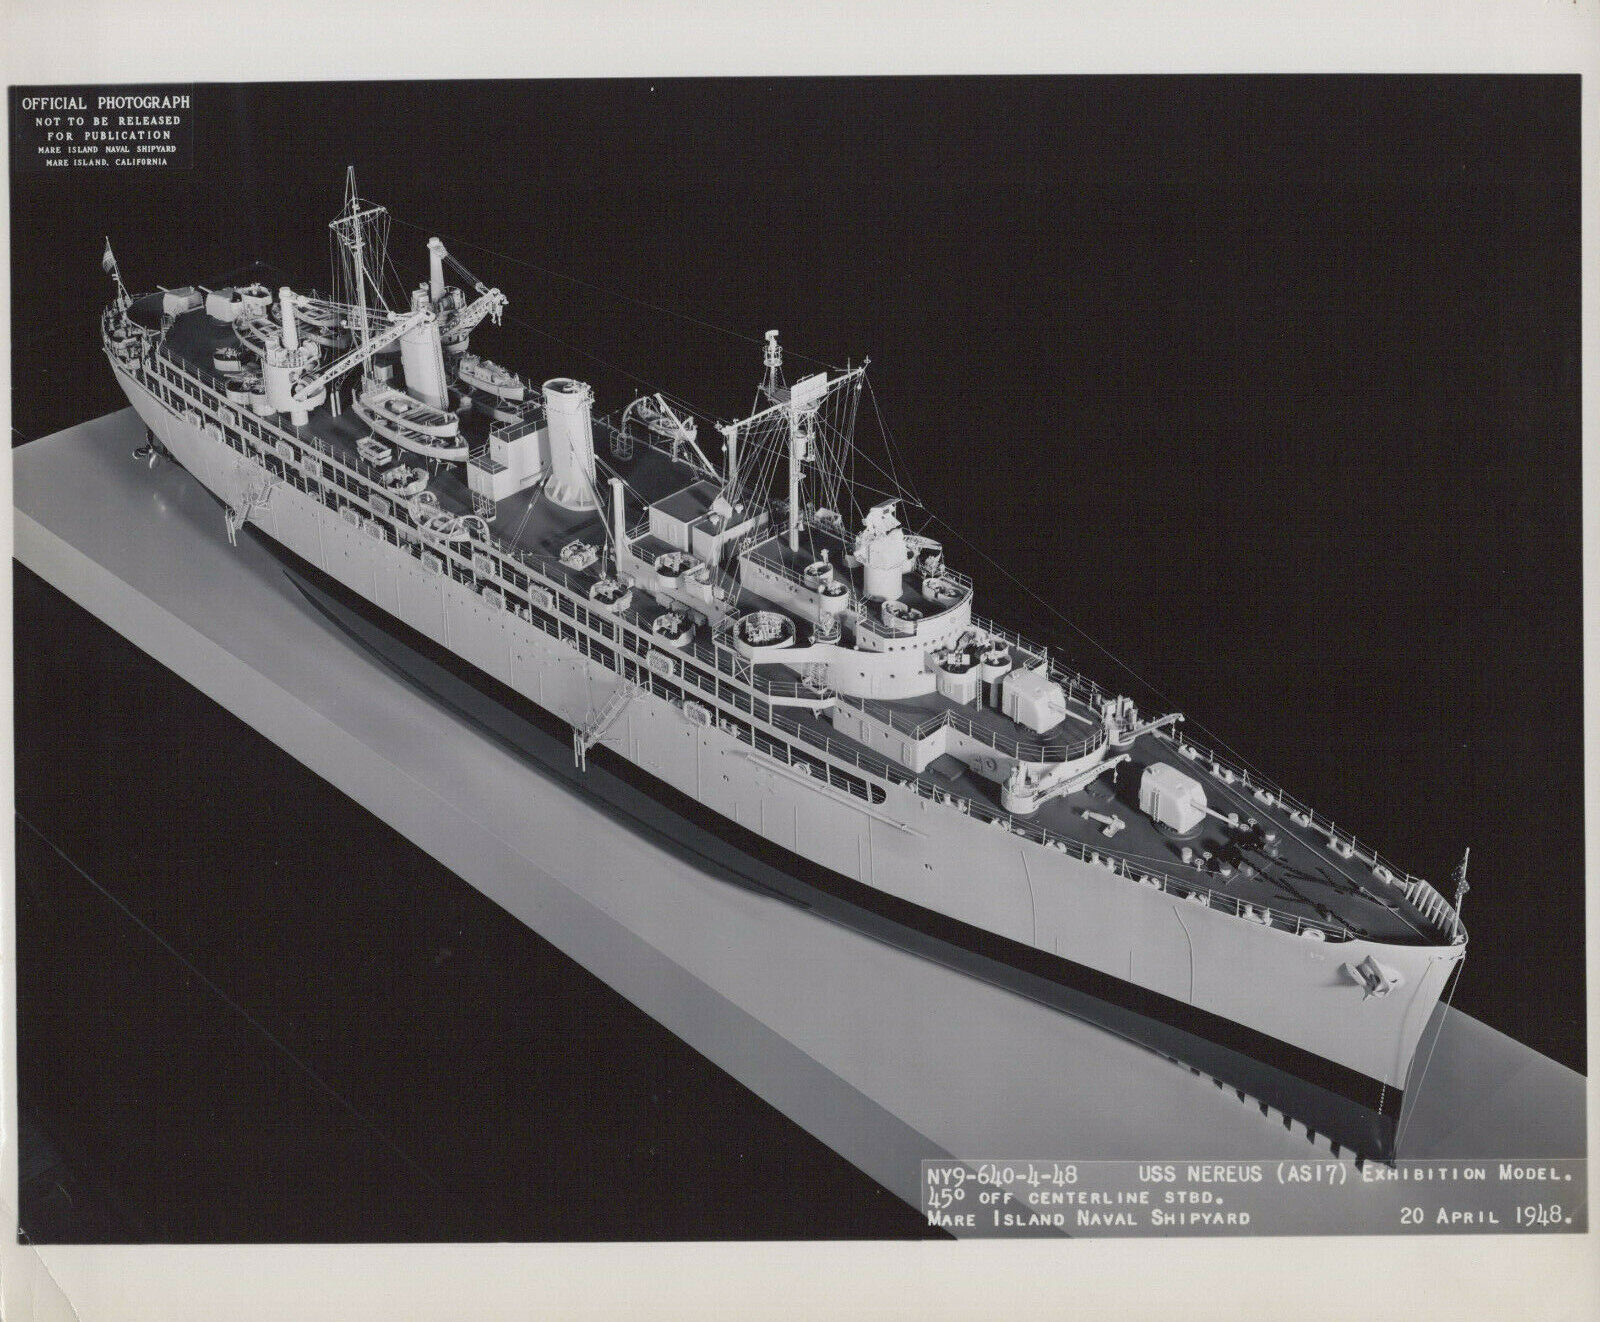 Mare Island Naval Shipyard USS NEREUS AS-17 Exhibition Model 1948 Photograph 